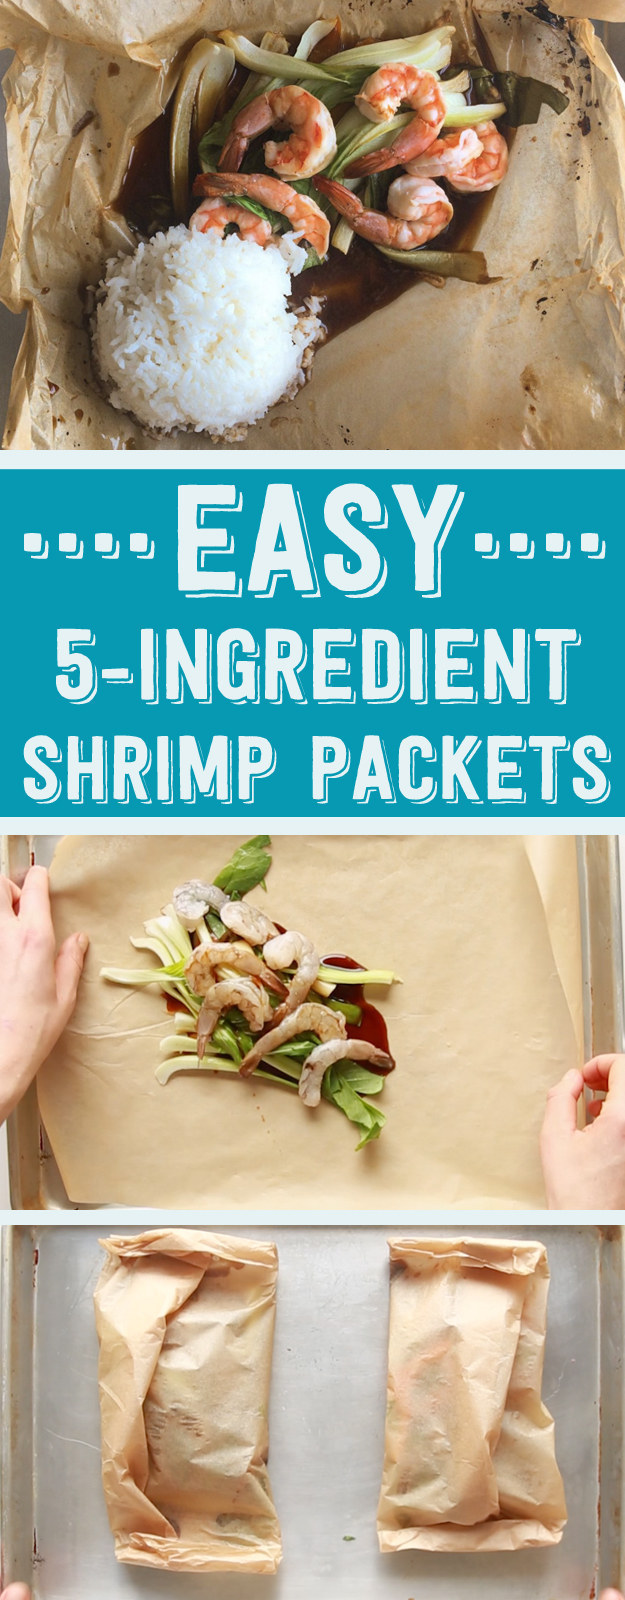 Easy 5-Ingredient Shrimp Packets